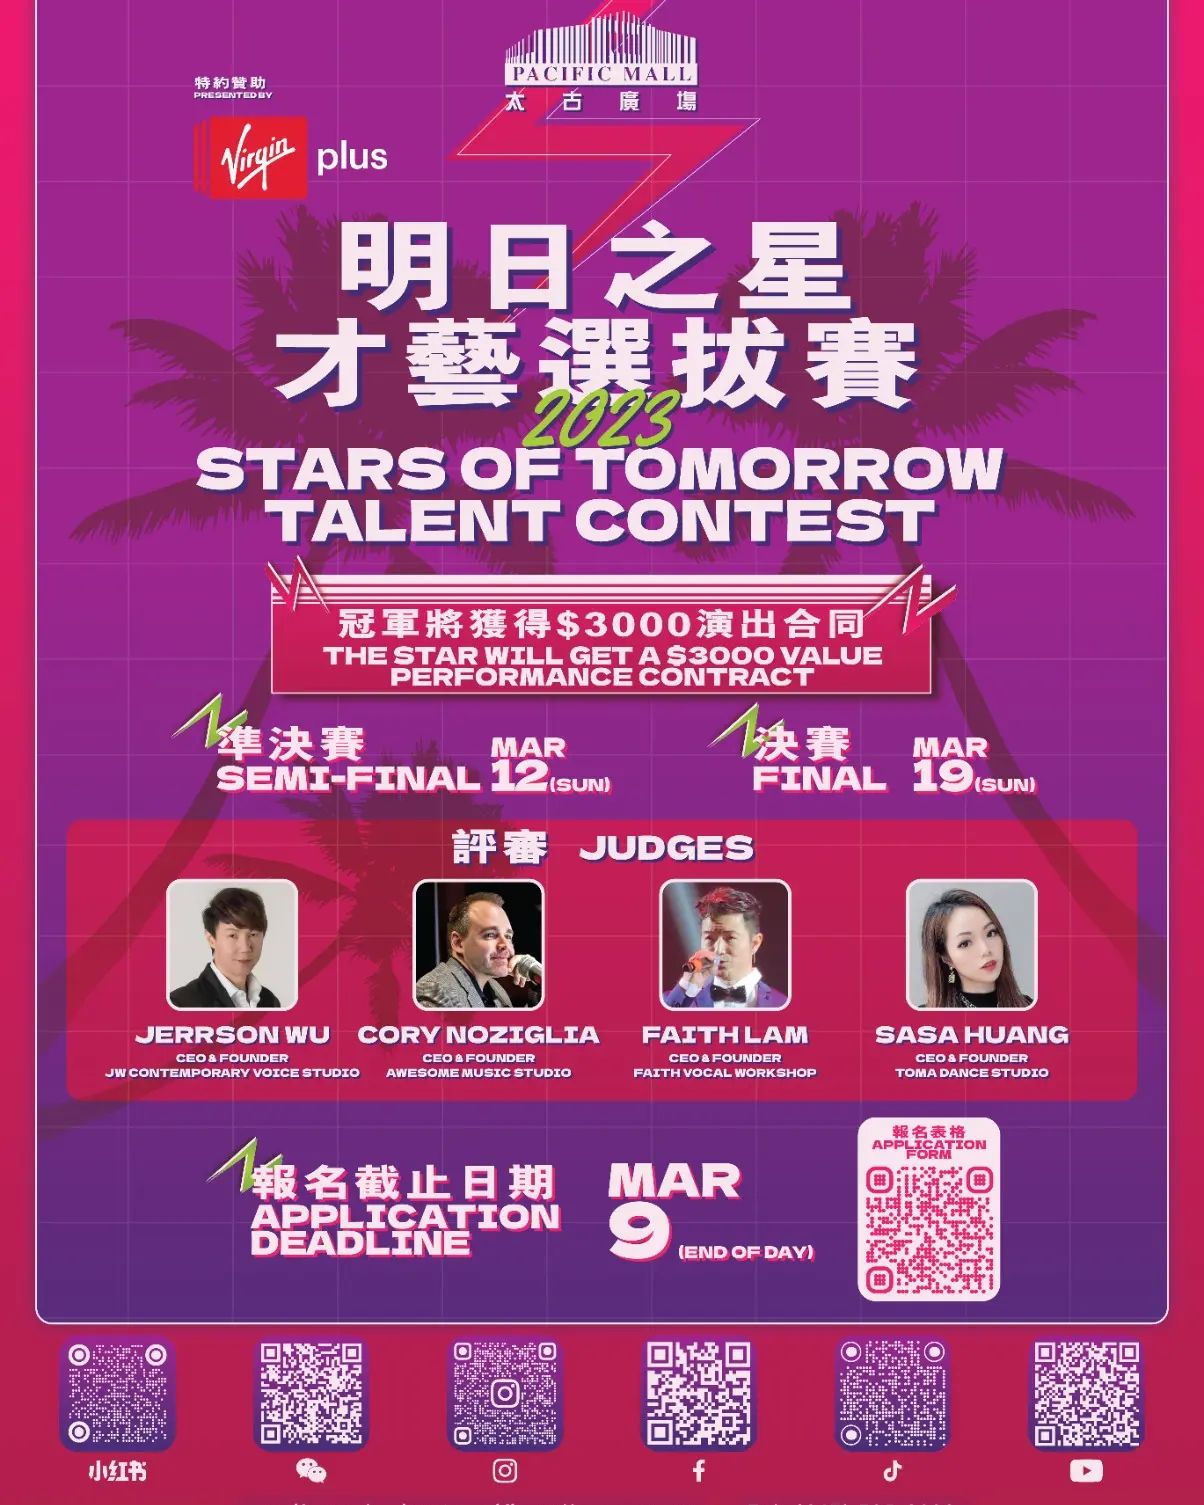 Virgin Plus presents: Stars of tomorrow talent contest 2023